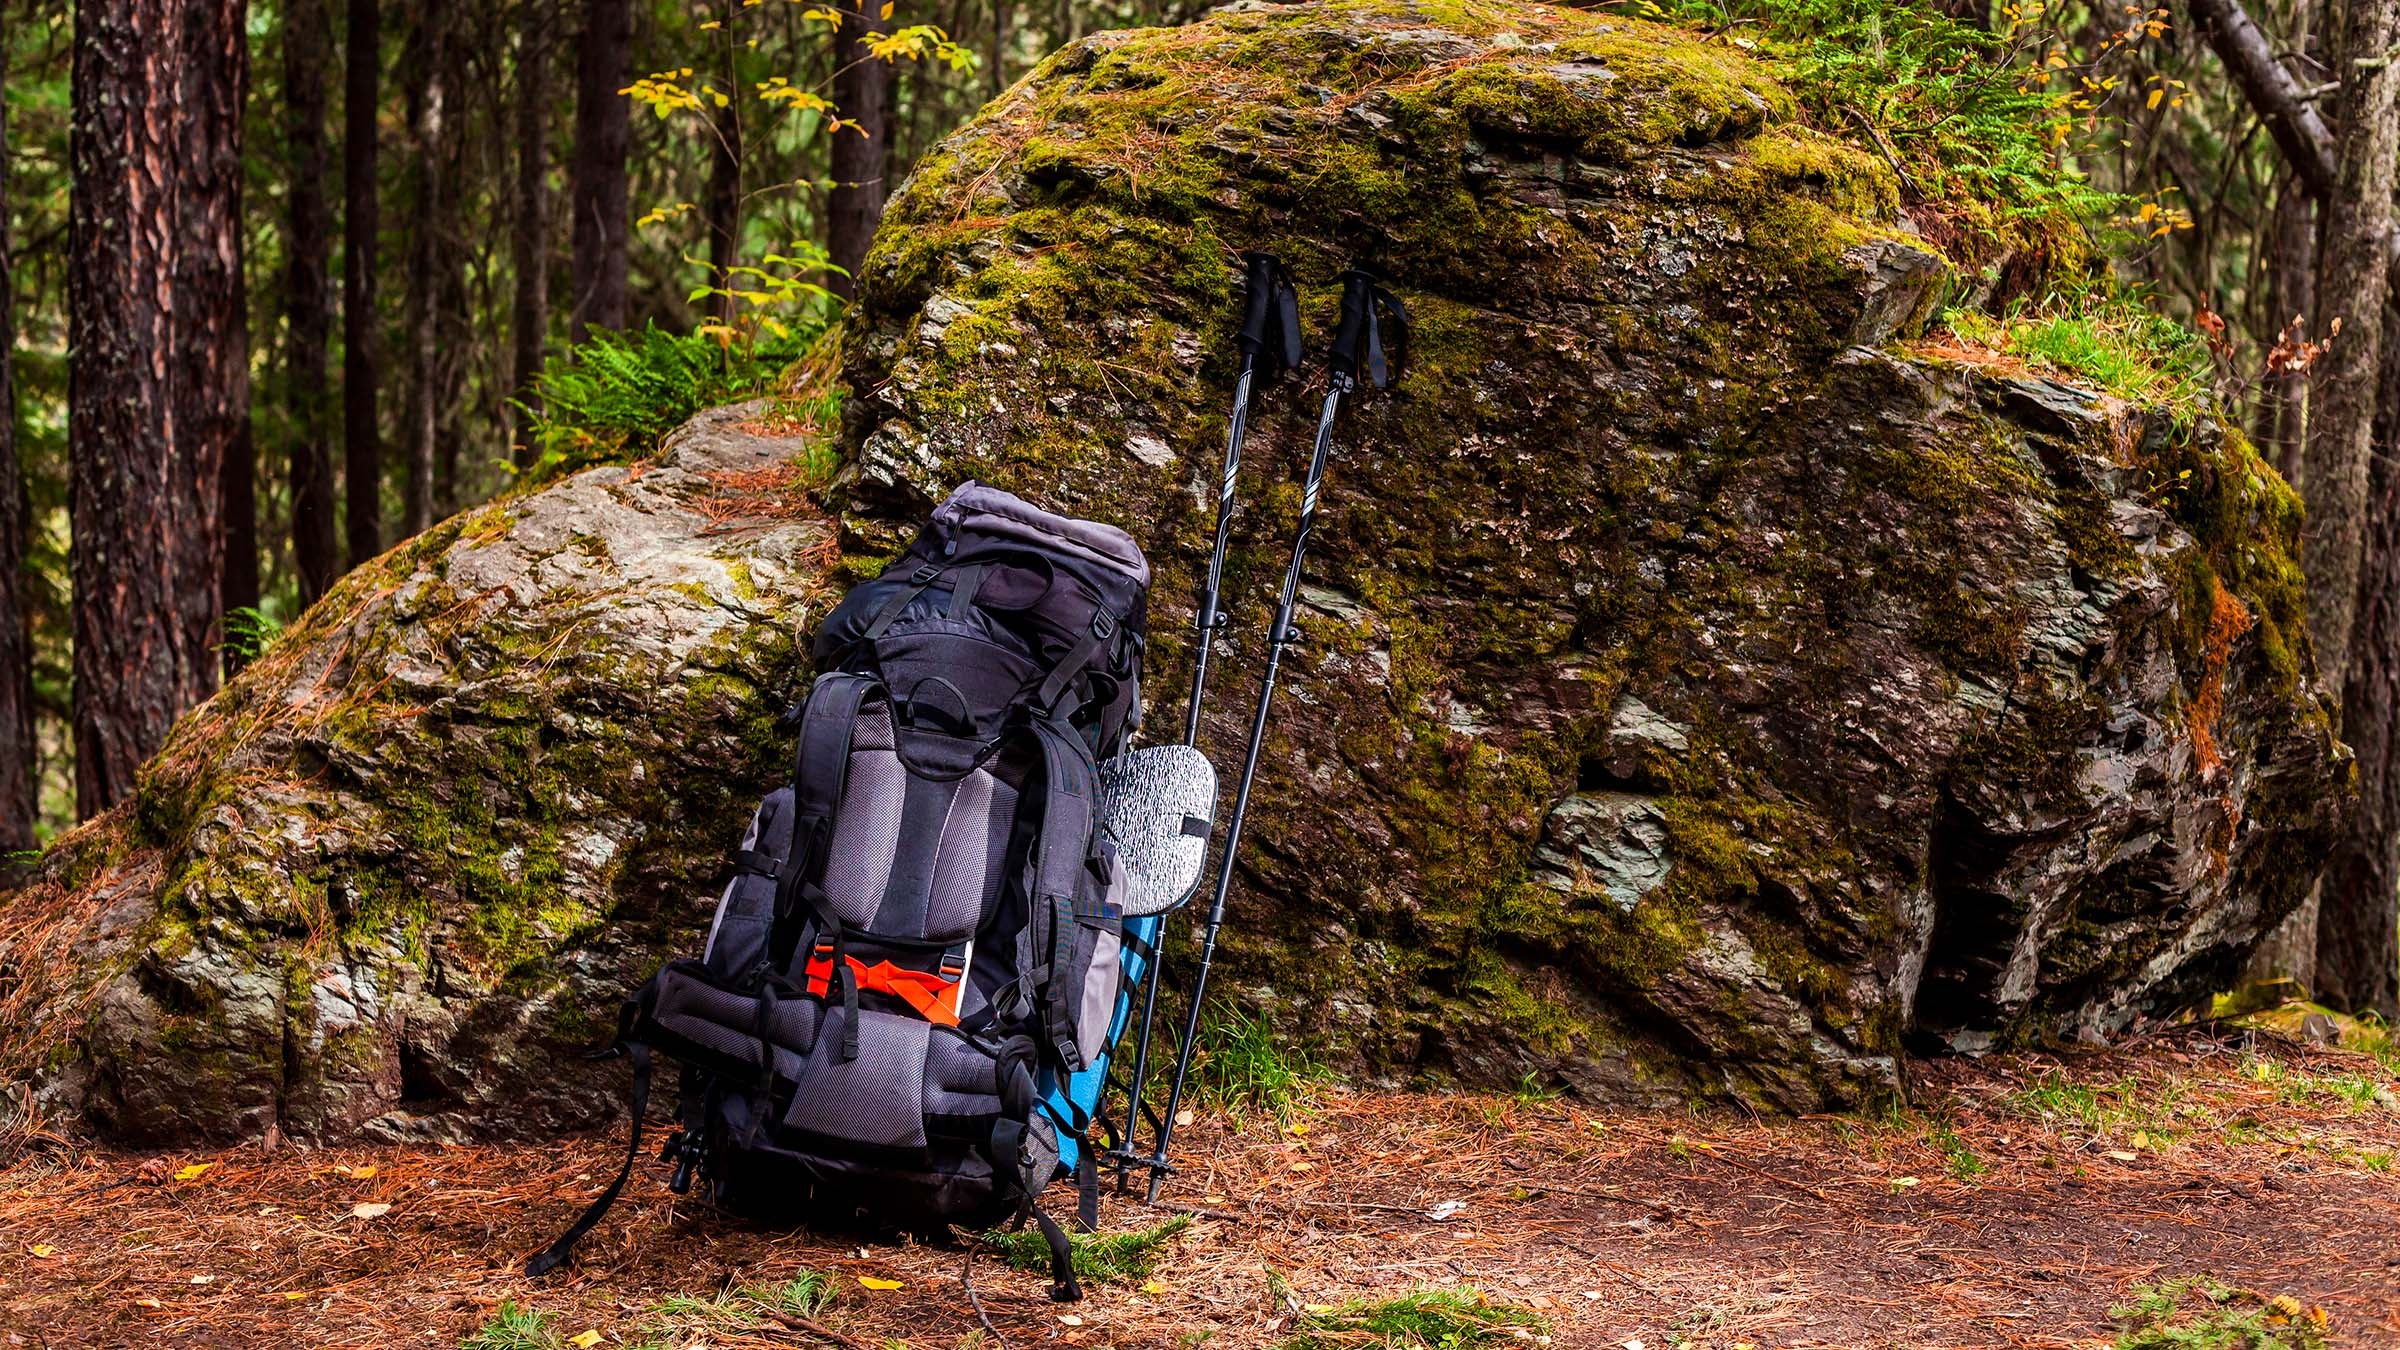 Backpacking: Hiking equipment - a backpack, survival gear, walking sticks, sleep system. 2400x1350 HD Wallpaper.